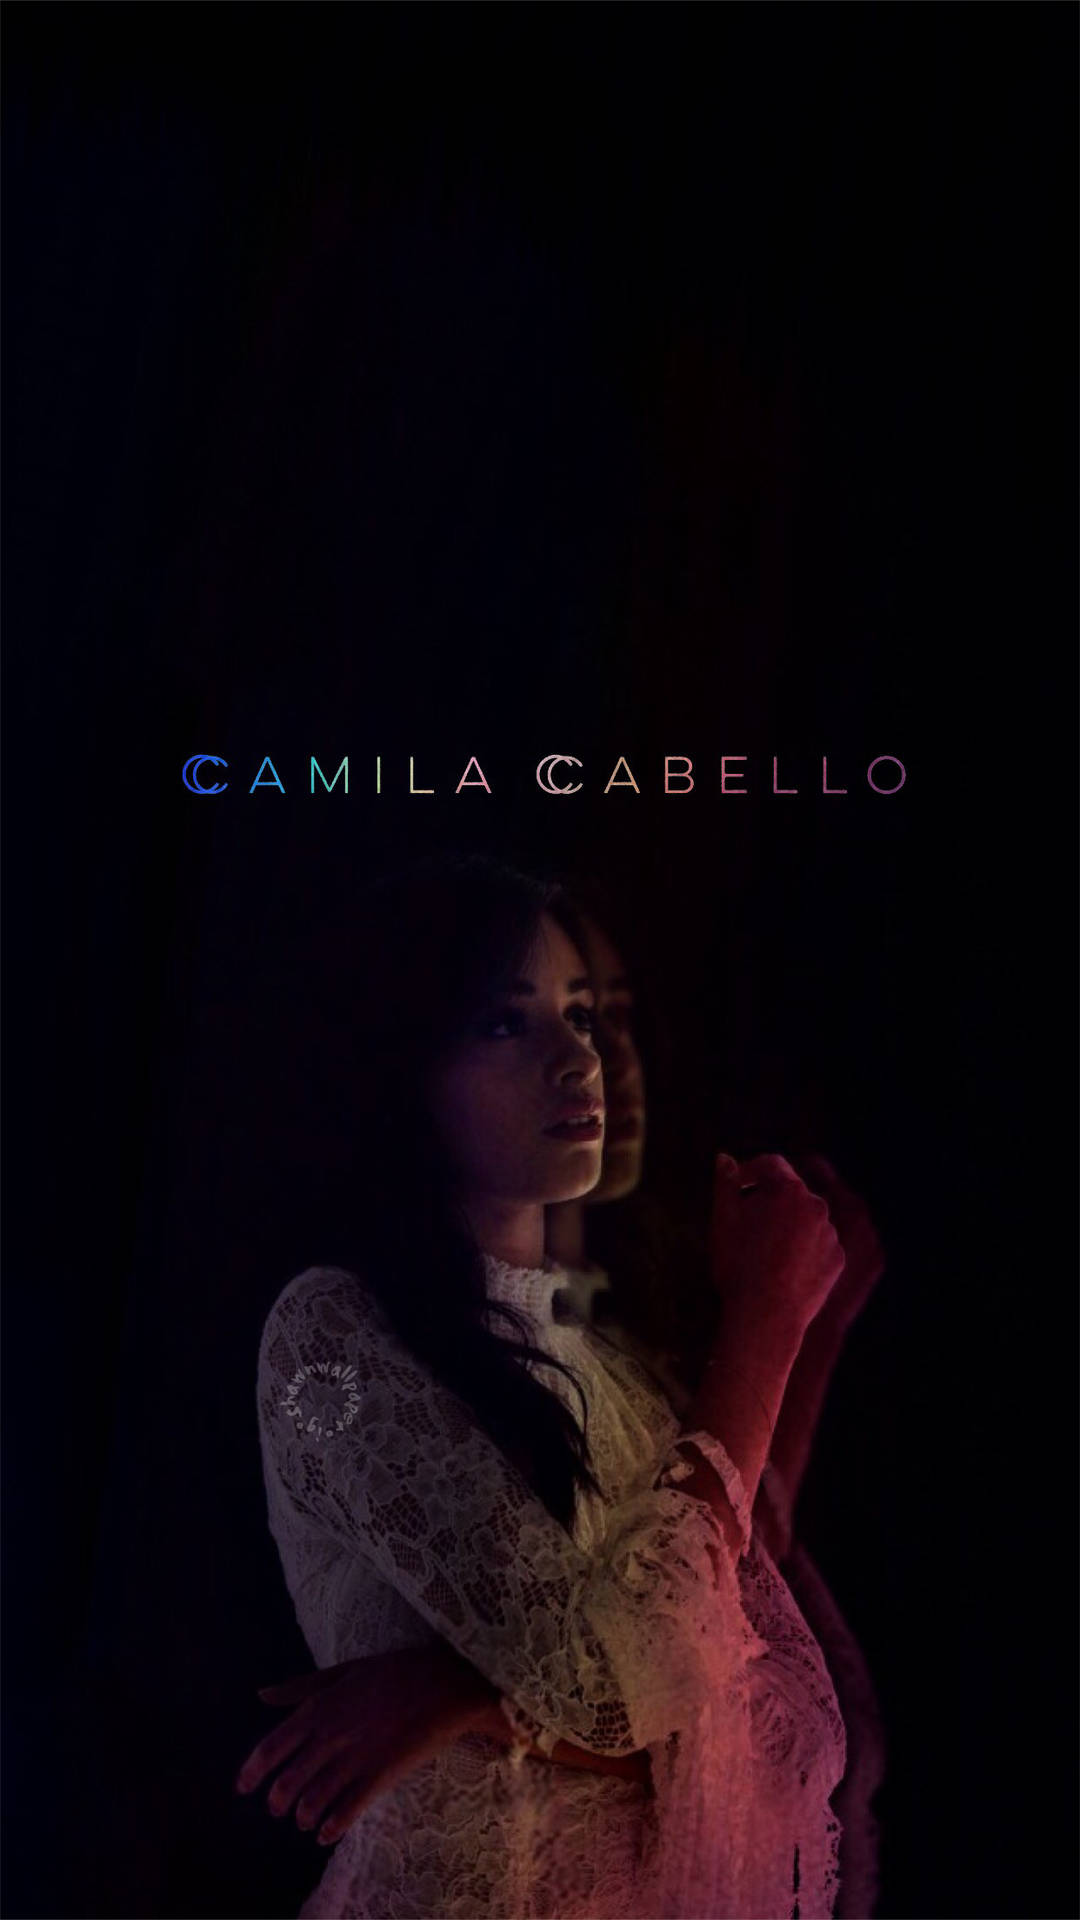 Grammy Artist Camila Cabello